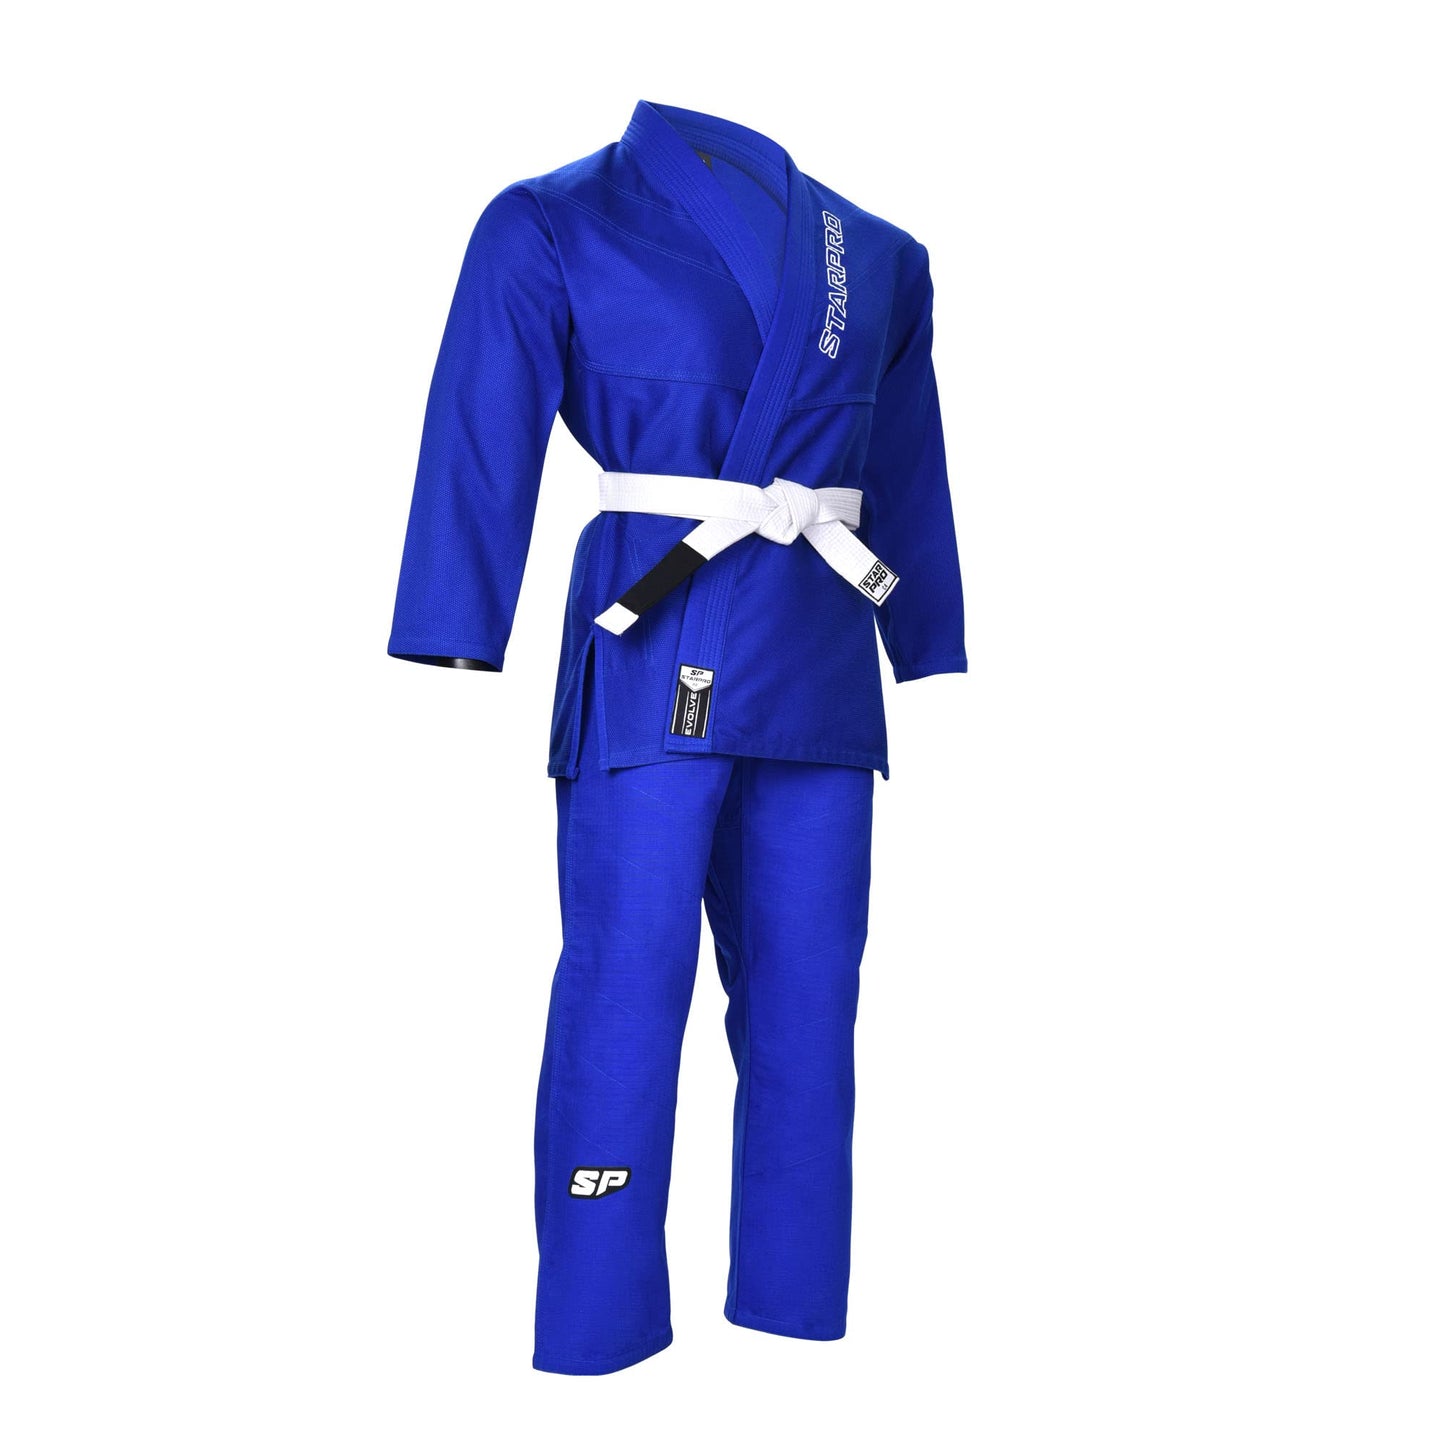 Starpro Evolve Kids BJJ GI - Premium Cotton Blend - White Blue Black - Preshrunk Gi for Boys Girls for Martial Arts Training and Fight